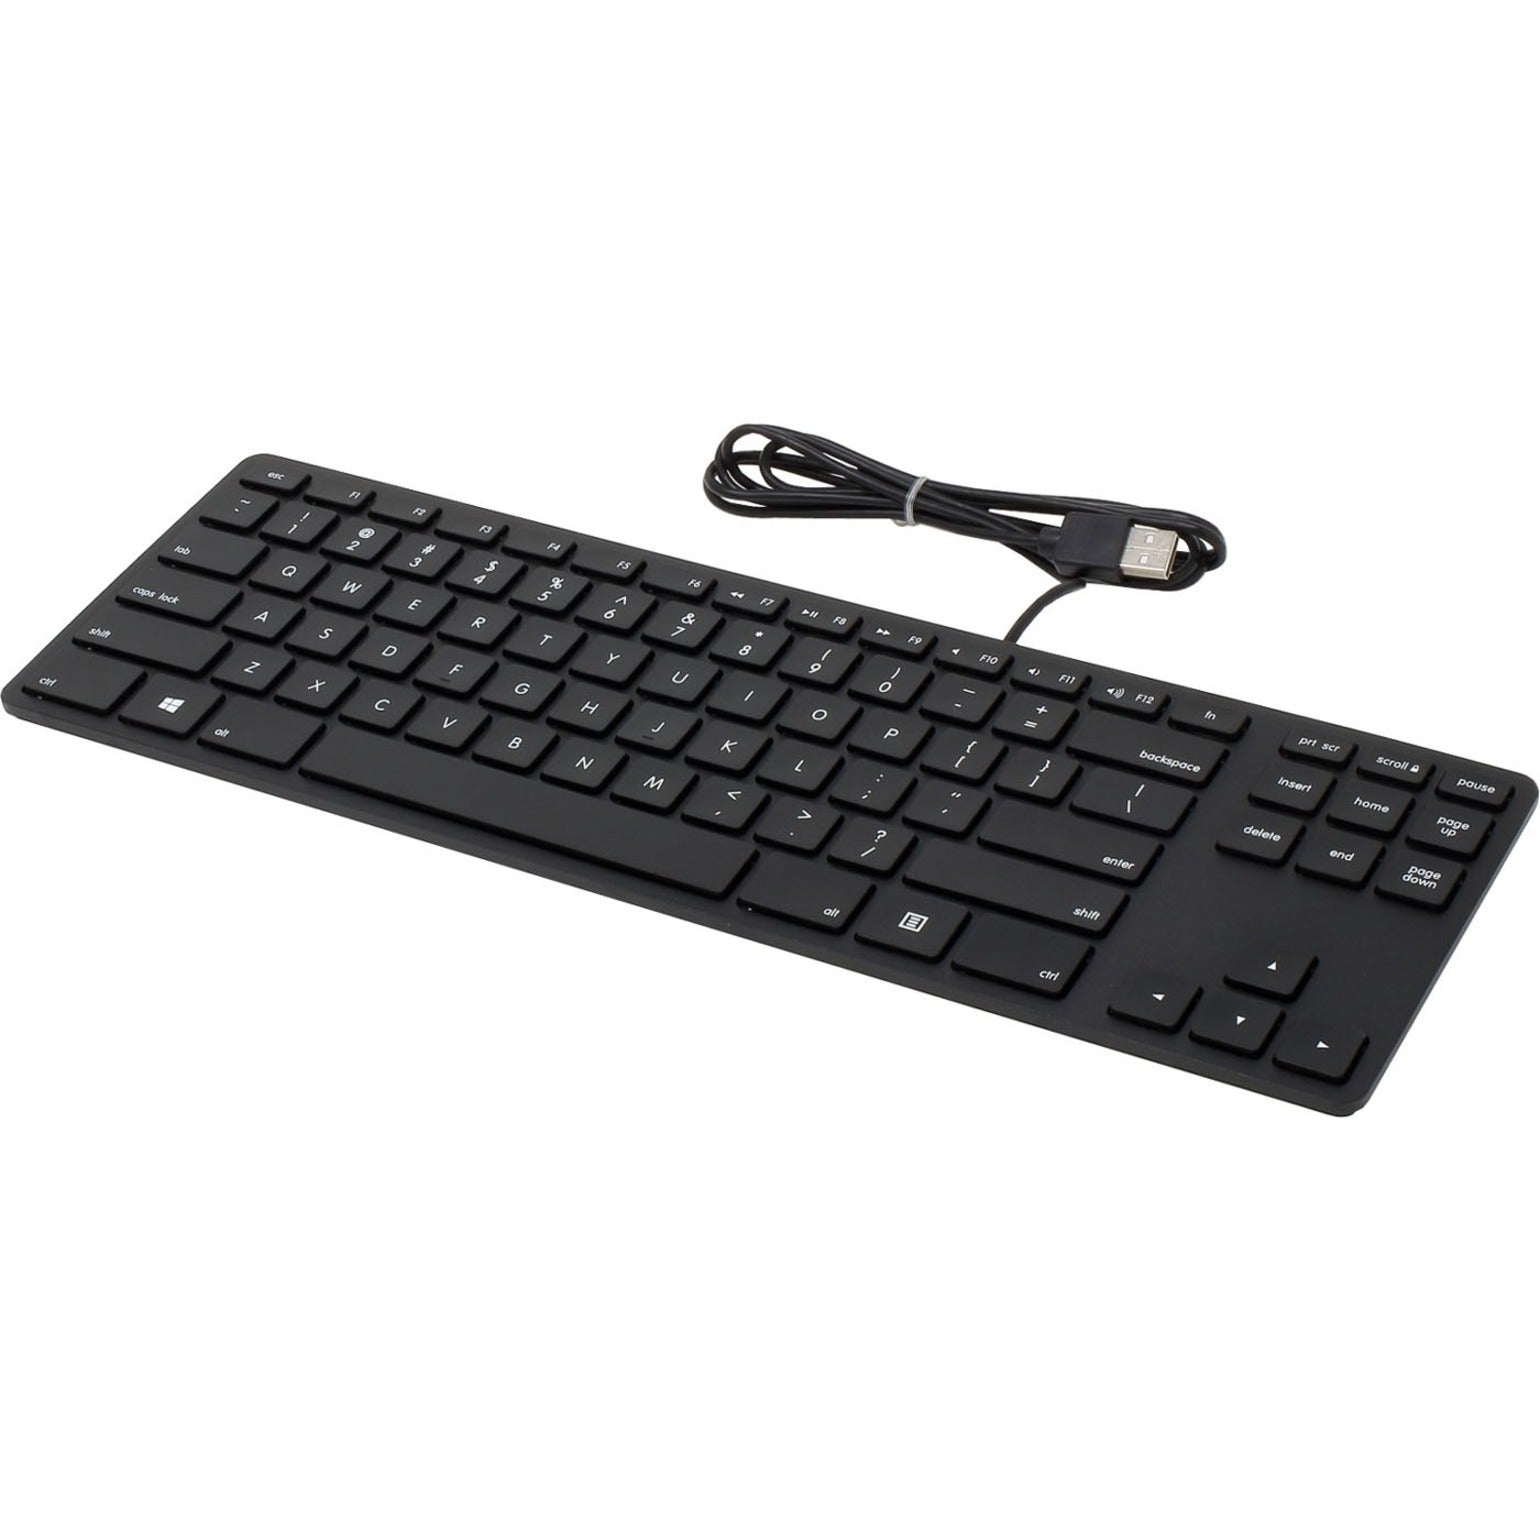 Matias FK308PCBB Wired Aluminum Tenkeyless Keyboard for PC - Black, Volume Control, USB 2.0 Type A